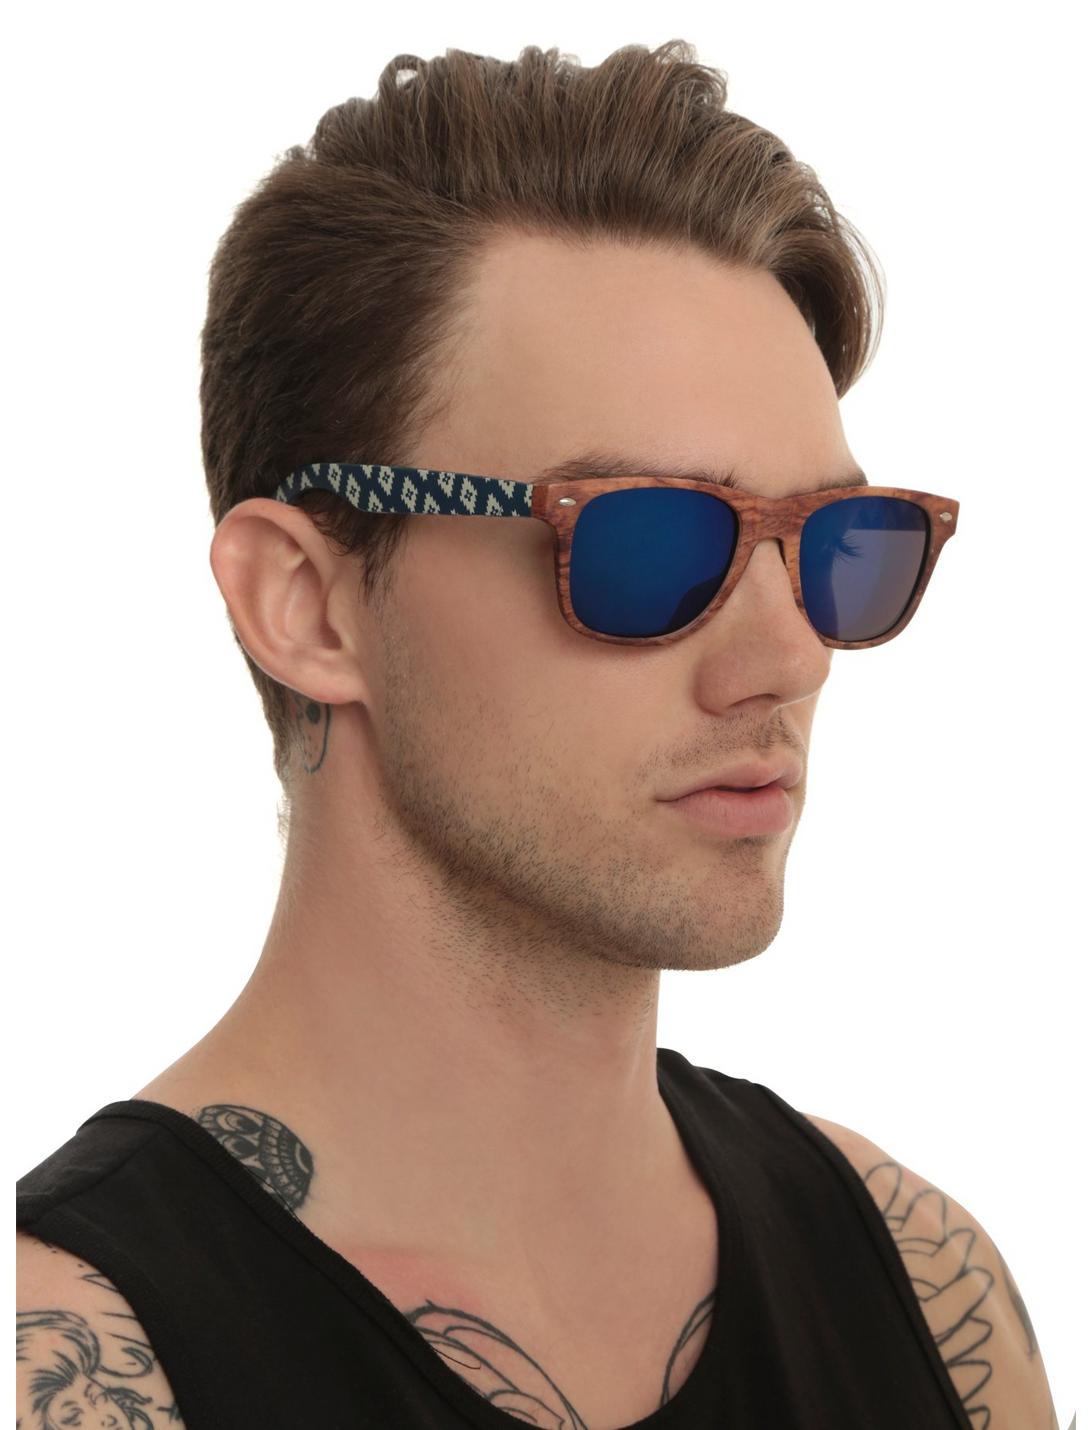 Faux Wood & Geometric Retro Sunglasses, , hi-res